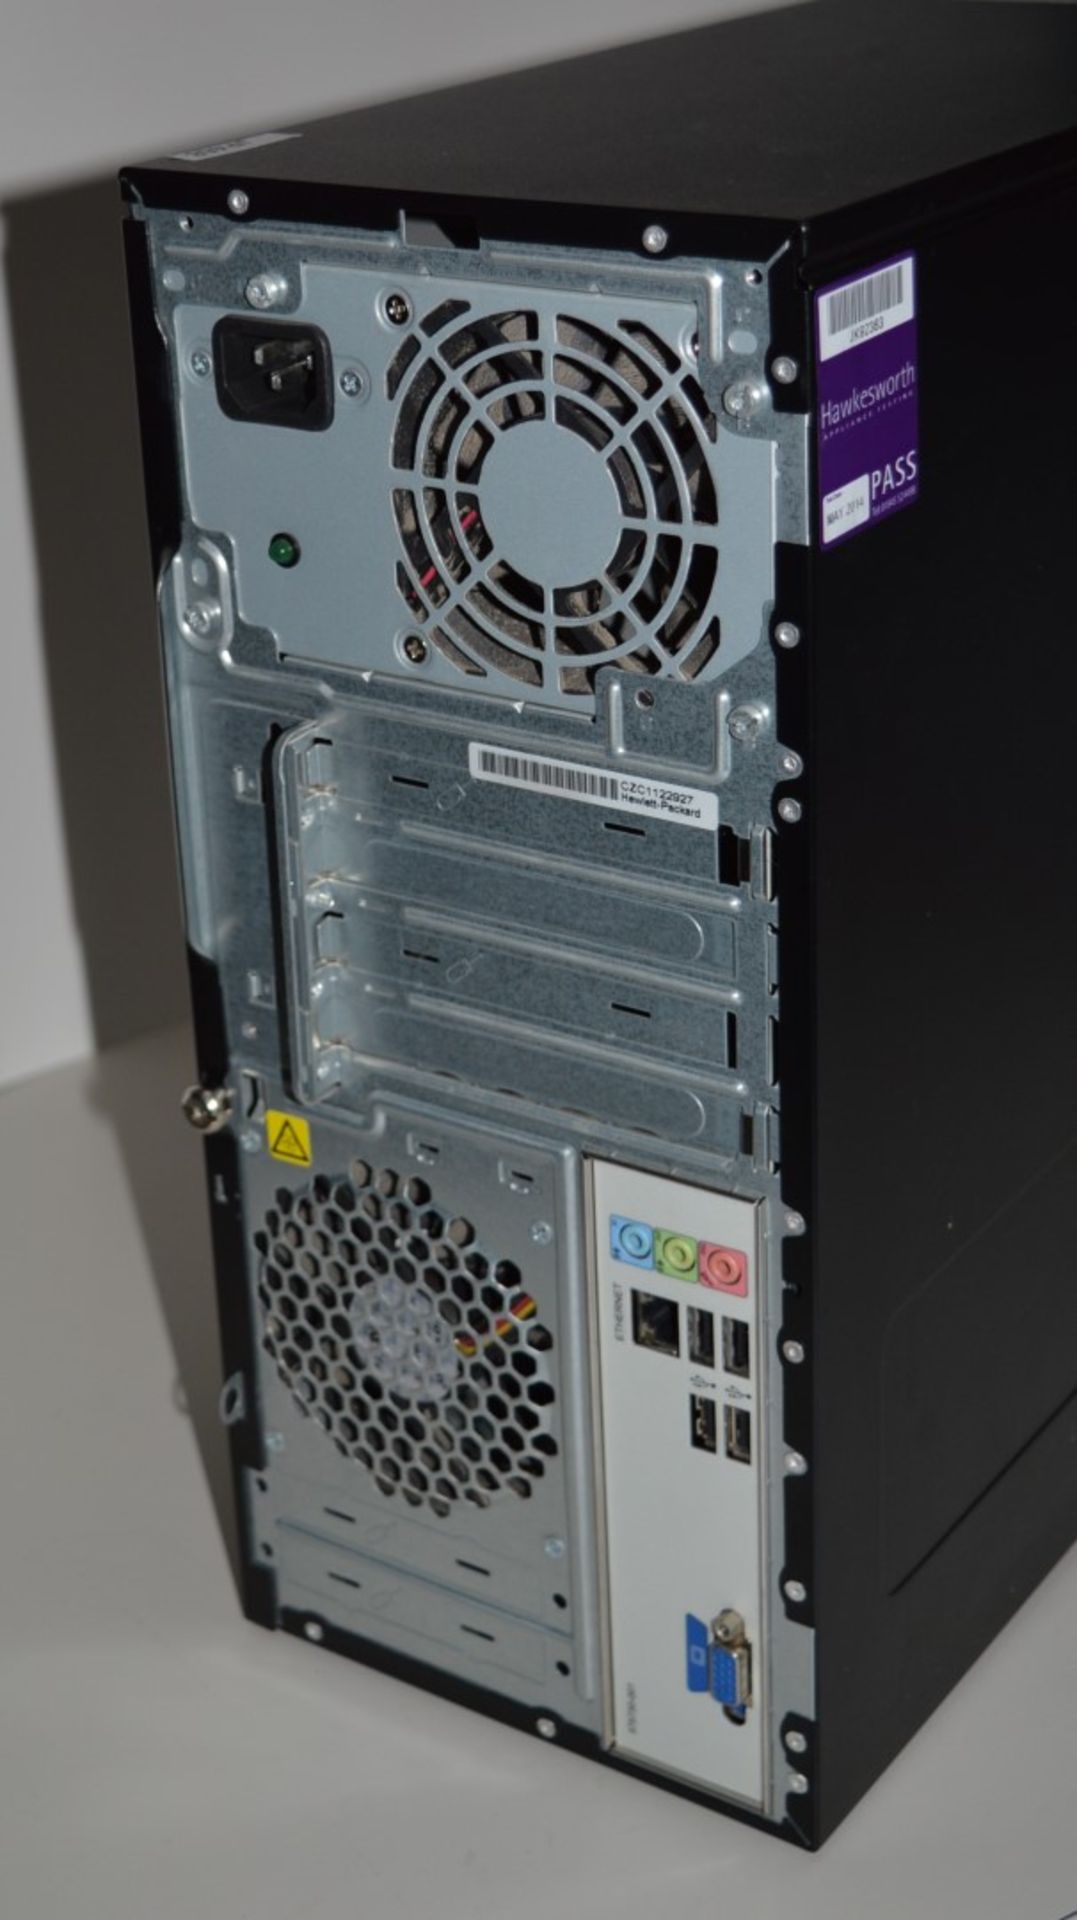 1 x Hewlet Packard Desktop Computer - Features an Intel Pentium E5800 3.2ghz Dual Core Processor, - Image 3 of 4